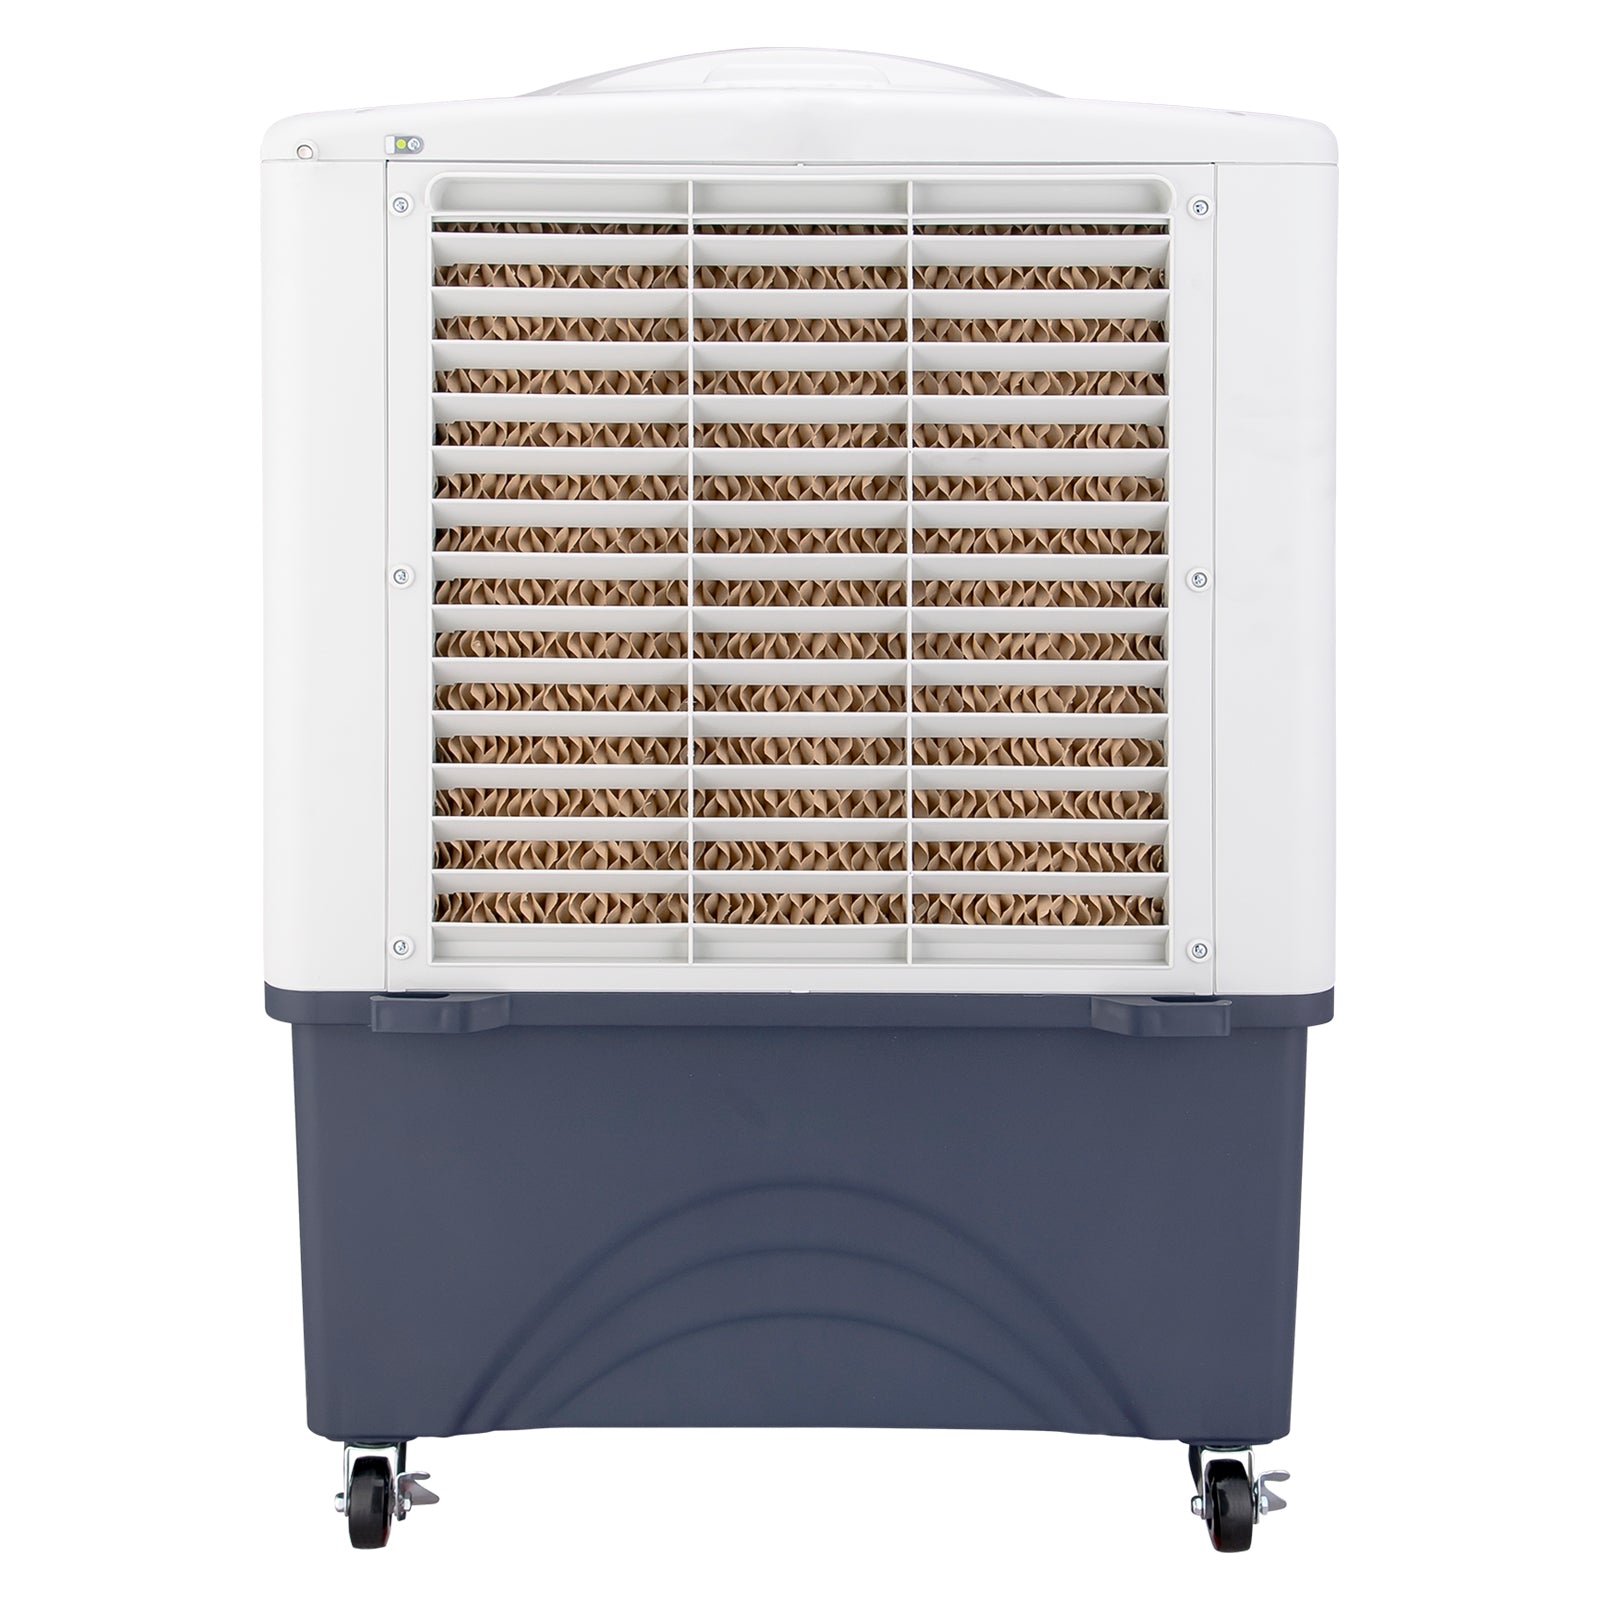 Honeywell 40lt Portable Evaporative Cooler